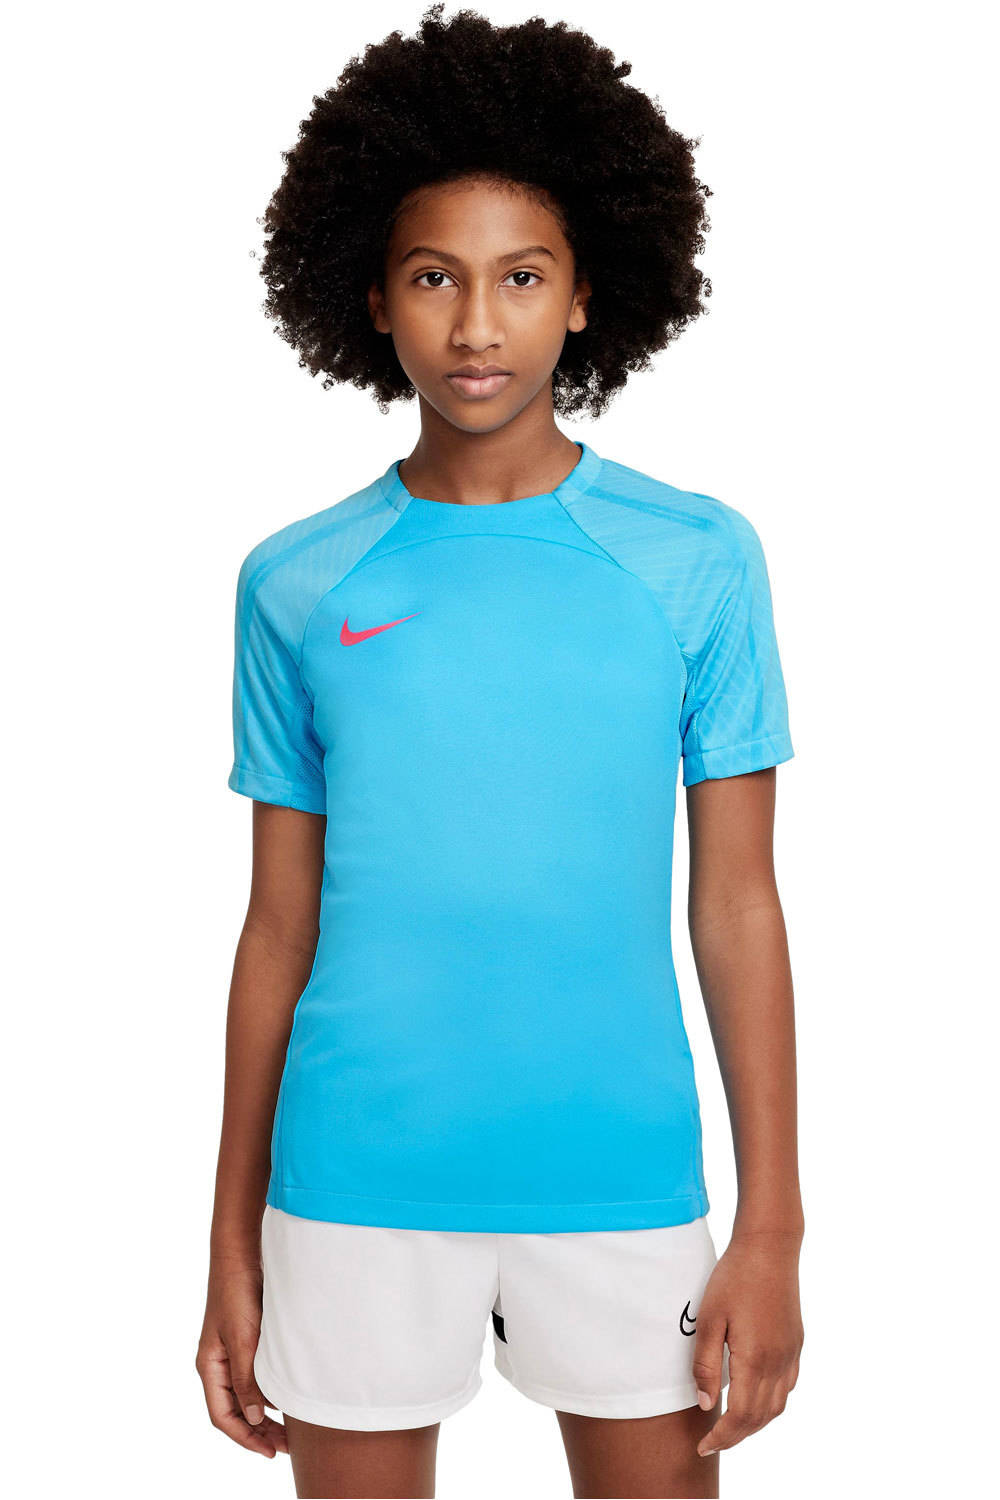 Nike camisetas entrenamiento futbol manga corta niño K NK DF STRK SS TOP K BR AZ vista frontal